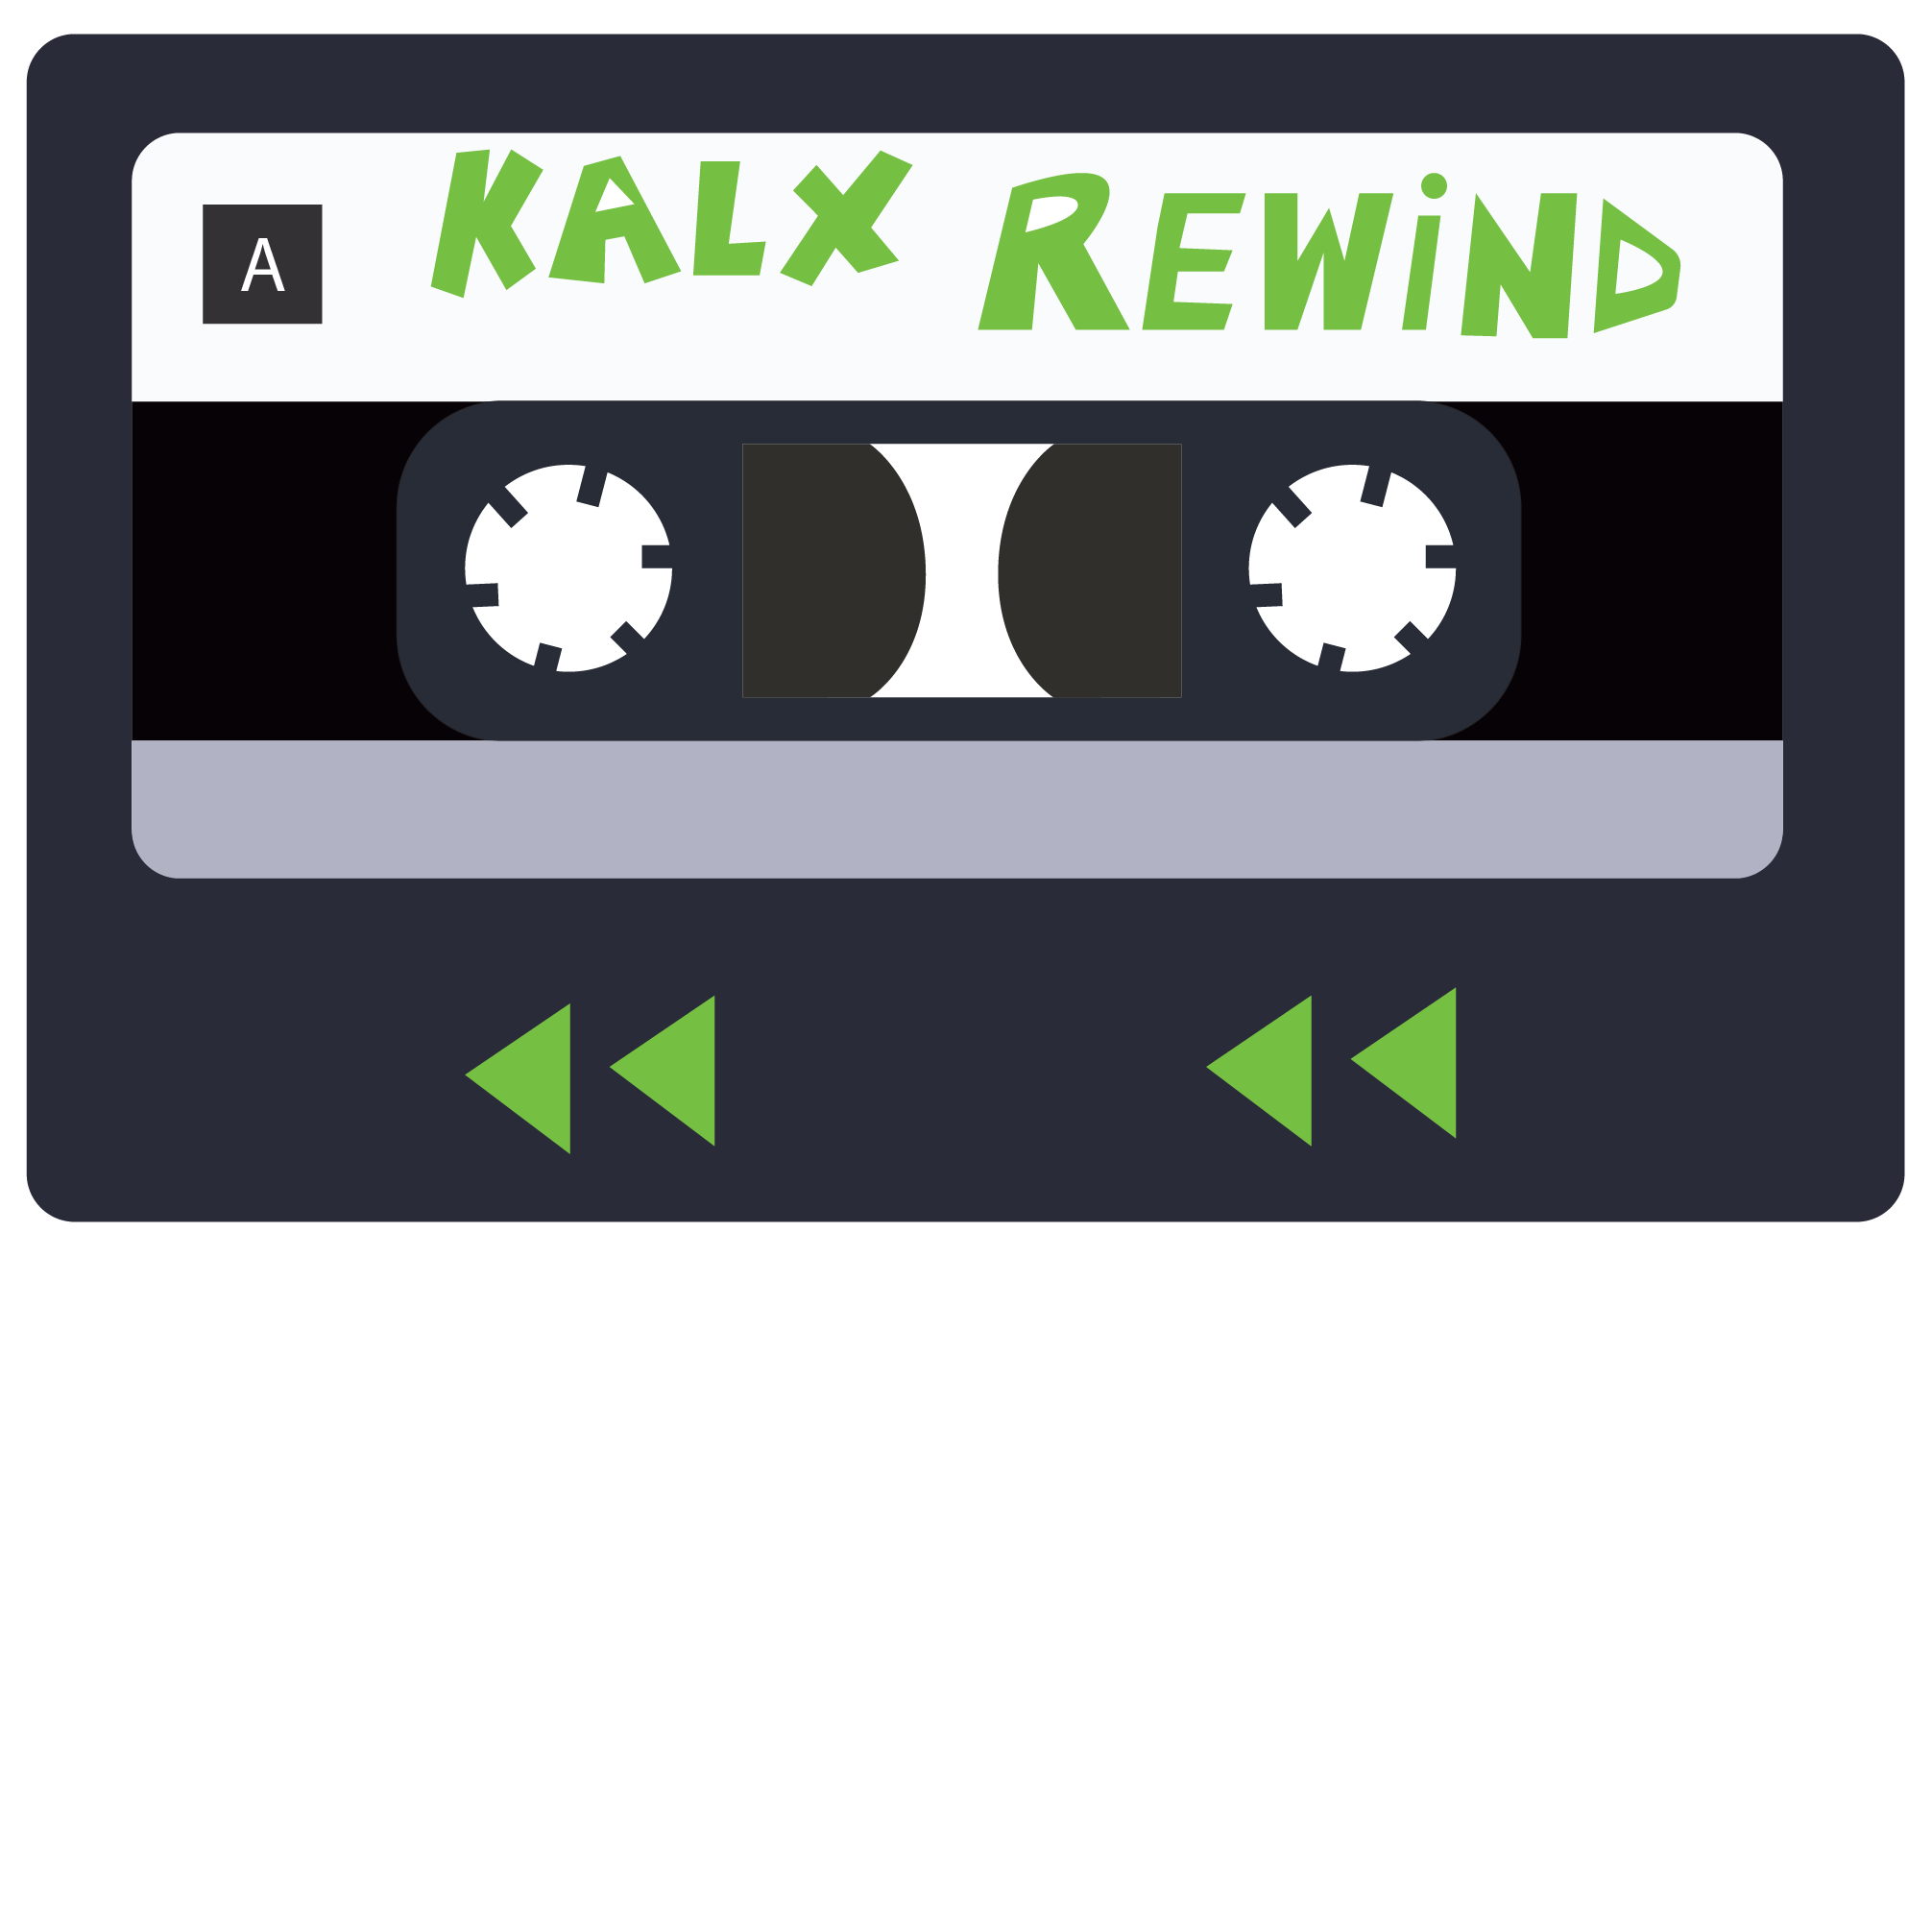 kalx-rewind-logo2-1